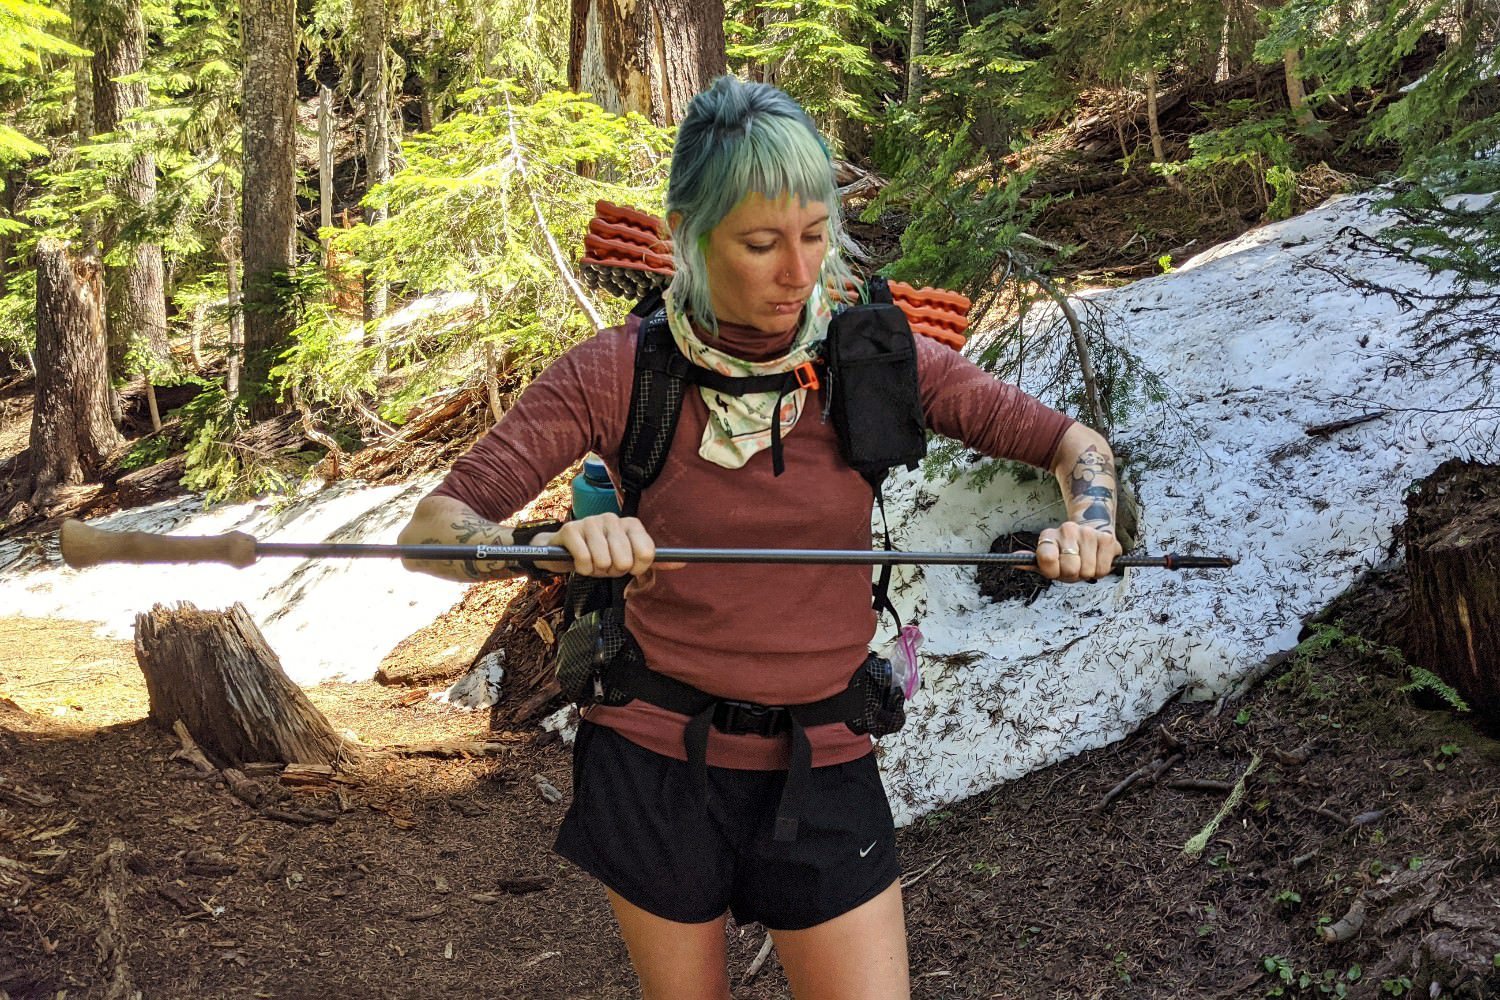 A backpacker twisting together the Gossamer Gear LT5 trekking poles